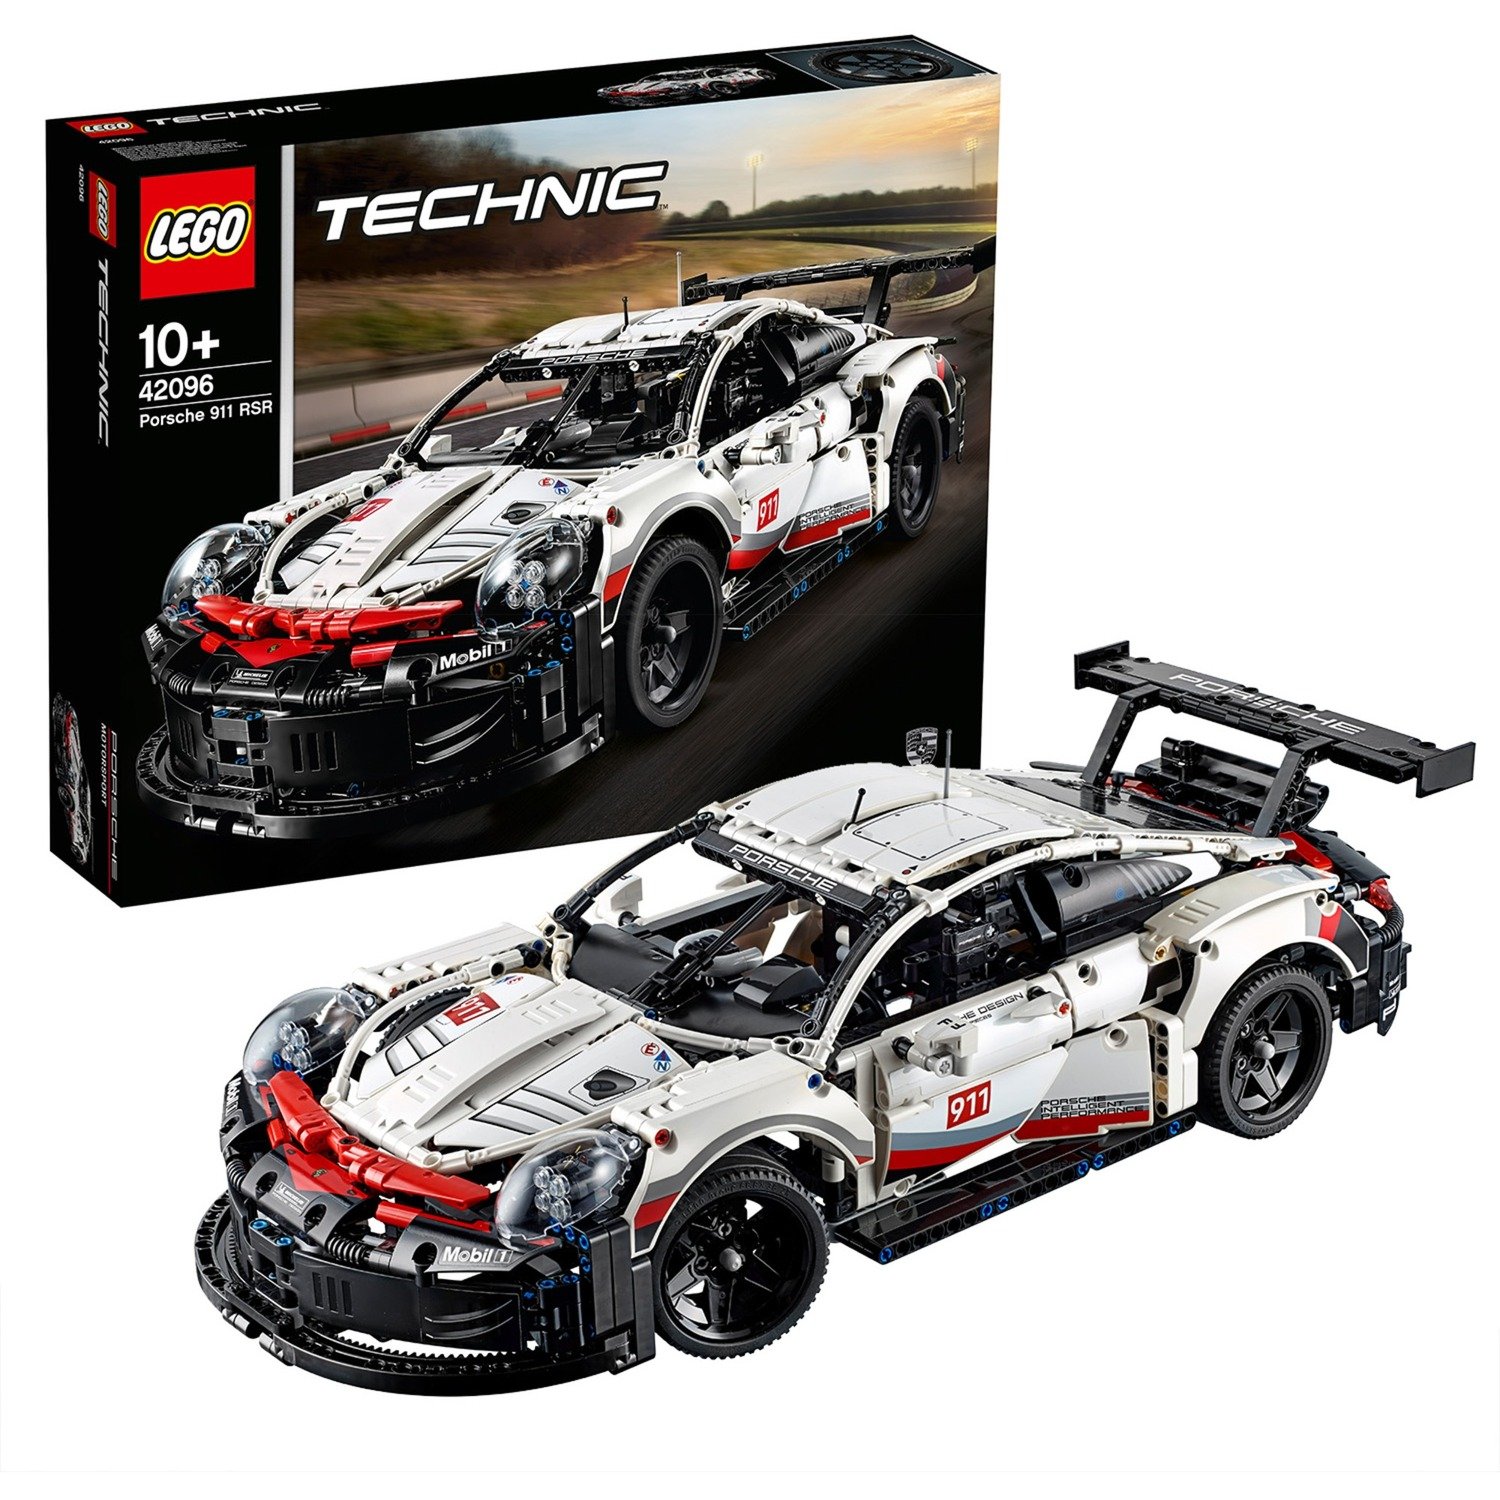 Spielzeug: Lego 42096 Technic Porsche 911 RSR